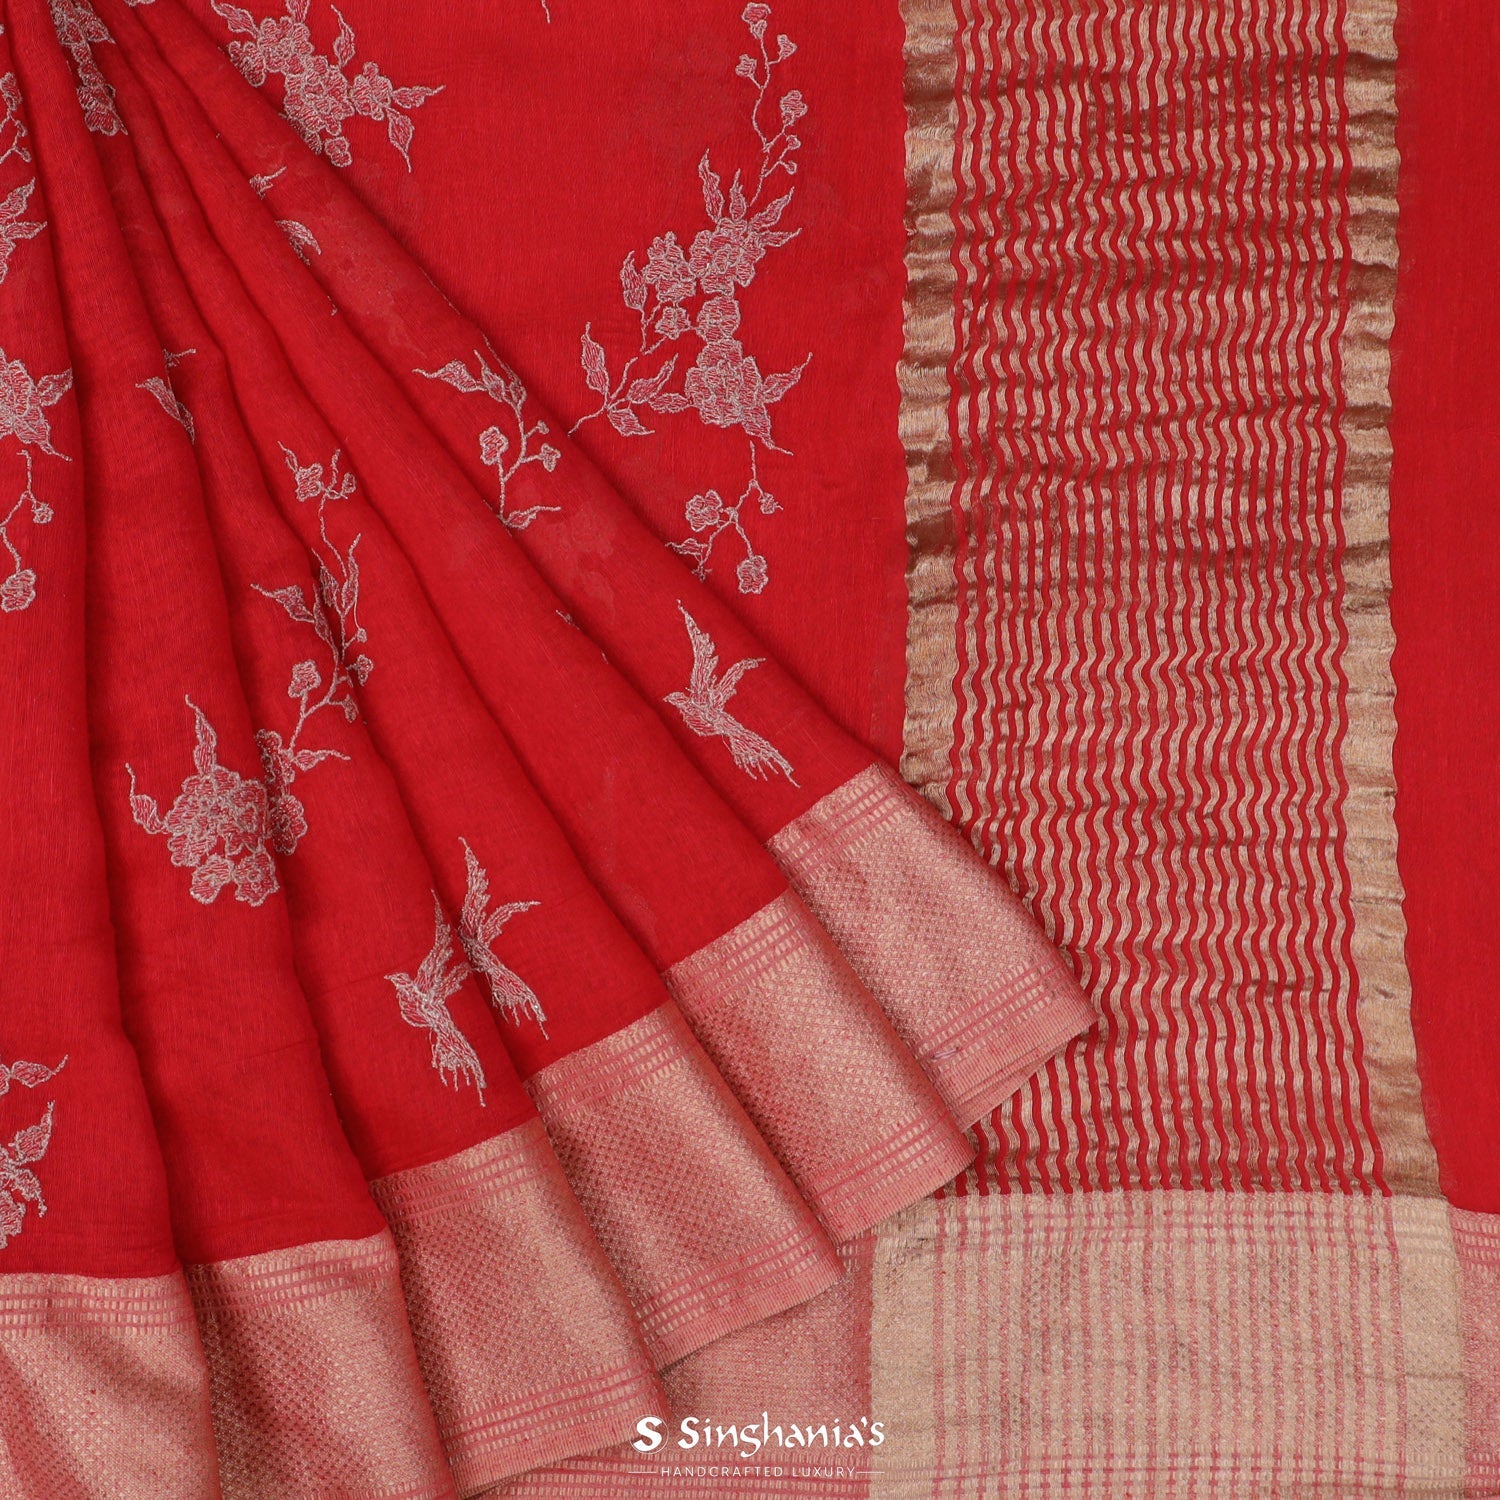 Alizarin Crimson Red Chanderi Silk Saree With Zari Embroidery In Floral-Birds Pattern